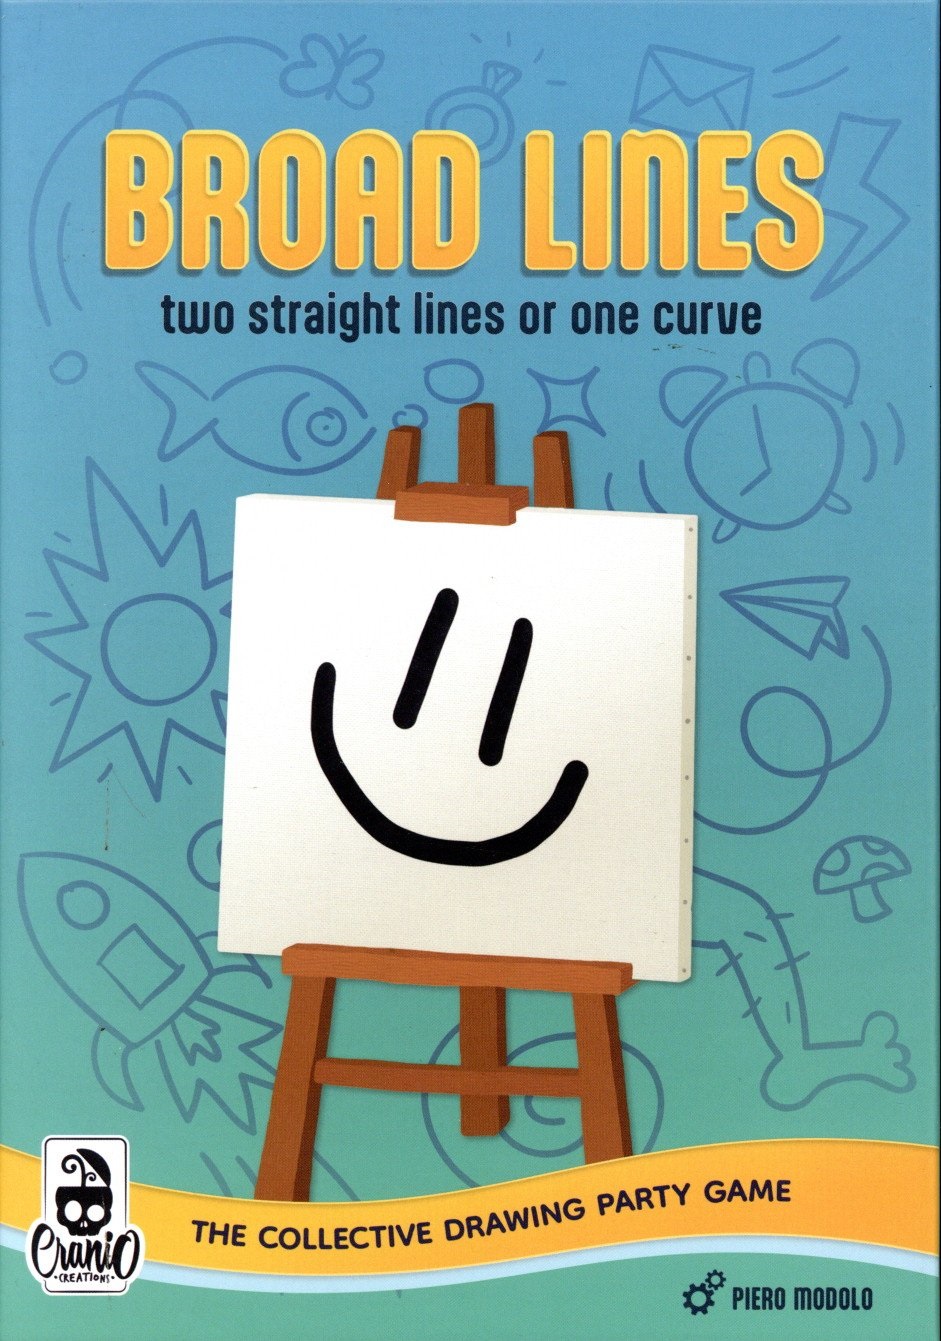 Broad Lines